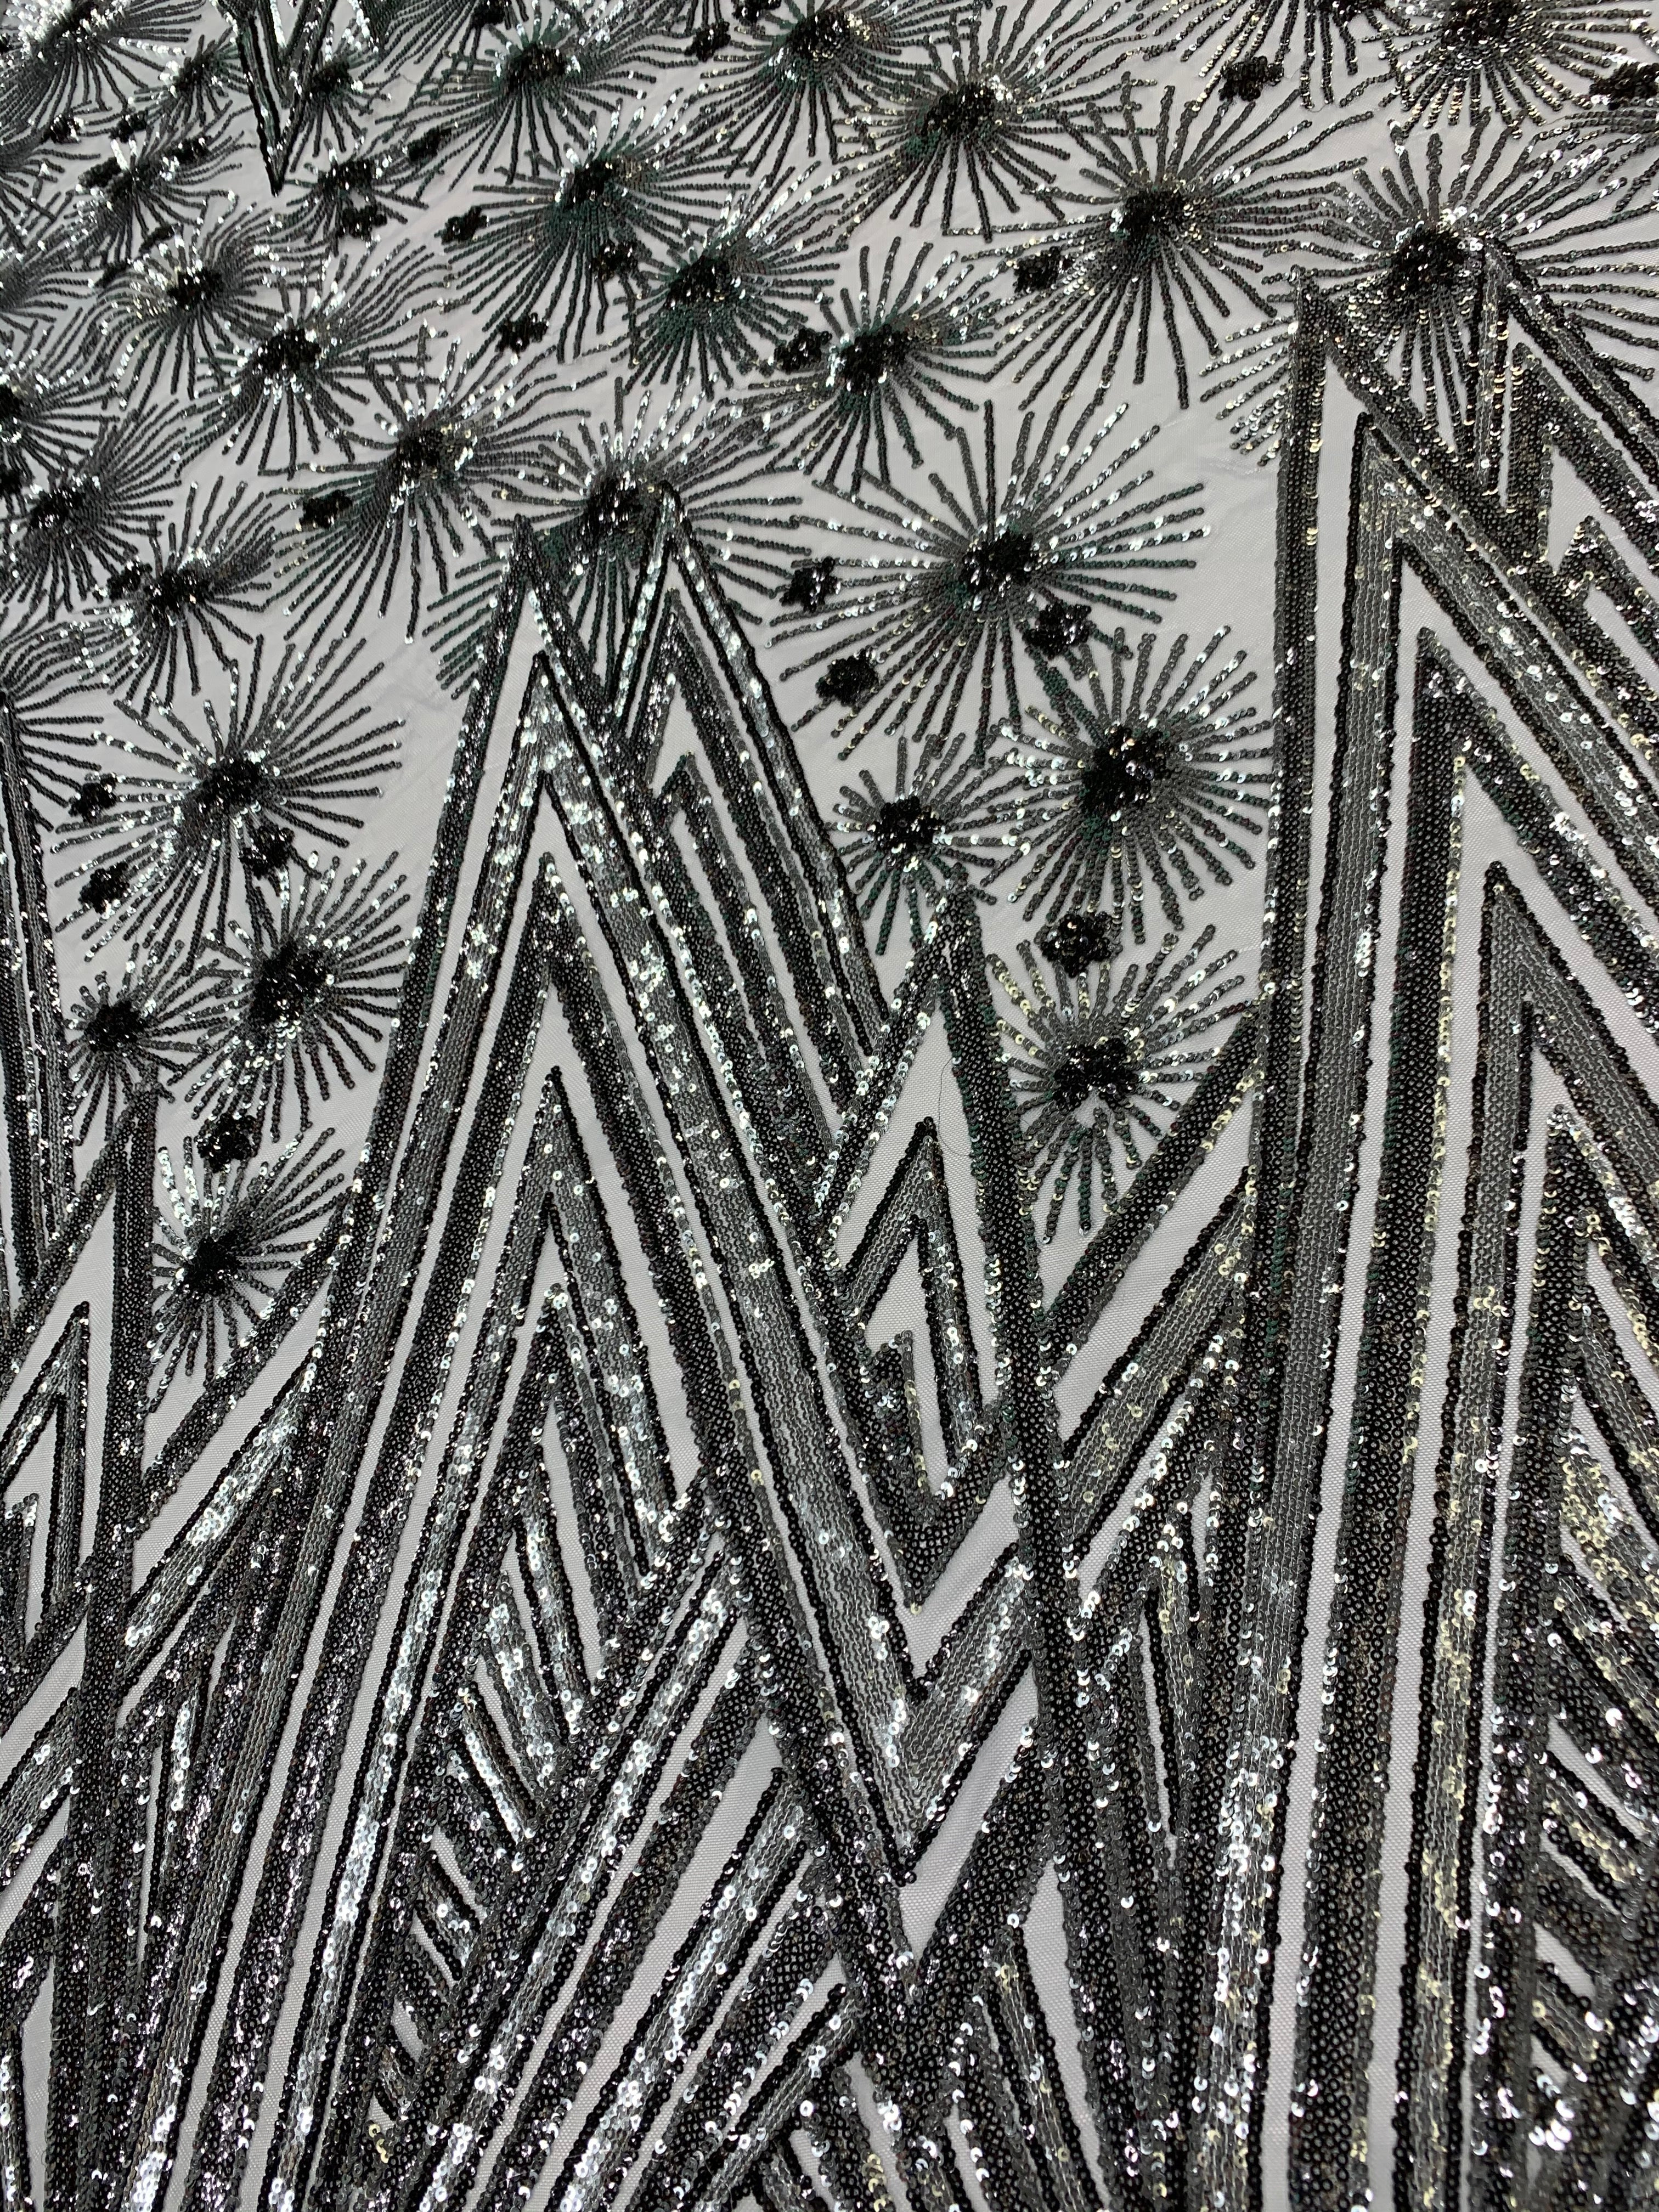 4 Way Stretch Iridescent Geometric Sequin Embroidered Mesh Lace FabricICEFABRICICE FABRICSGray IridescentBy The Yard (58" Wide)4 Way Stretch Iridescent Geometric Sequin Embroidered Mesh Lace Fabric ICEFABRIC |Gray Iridescent